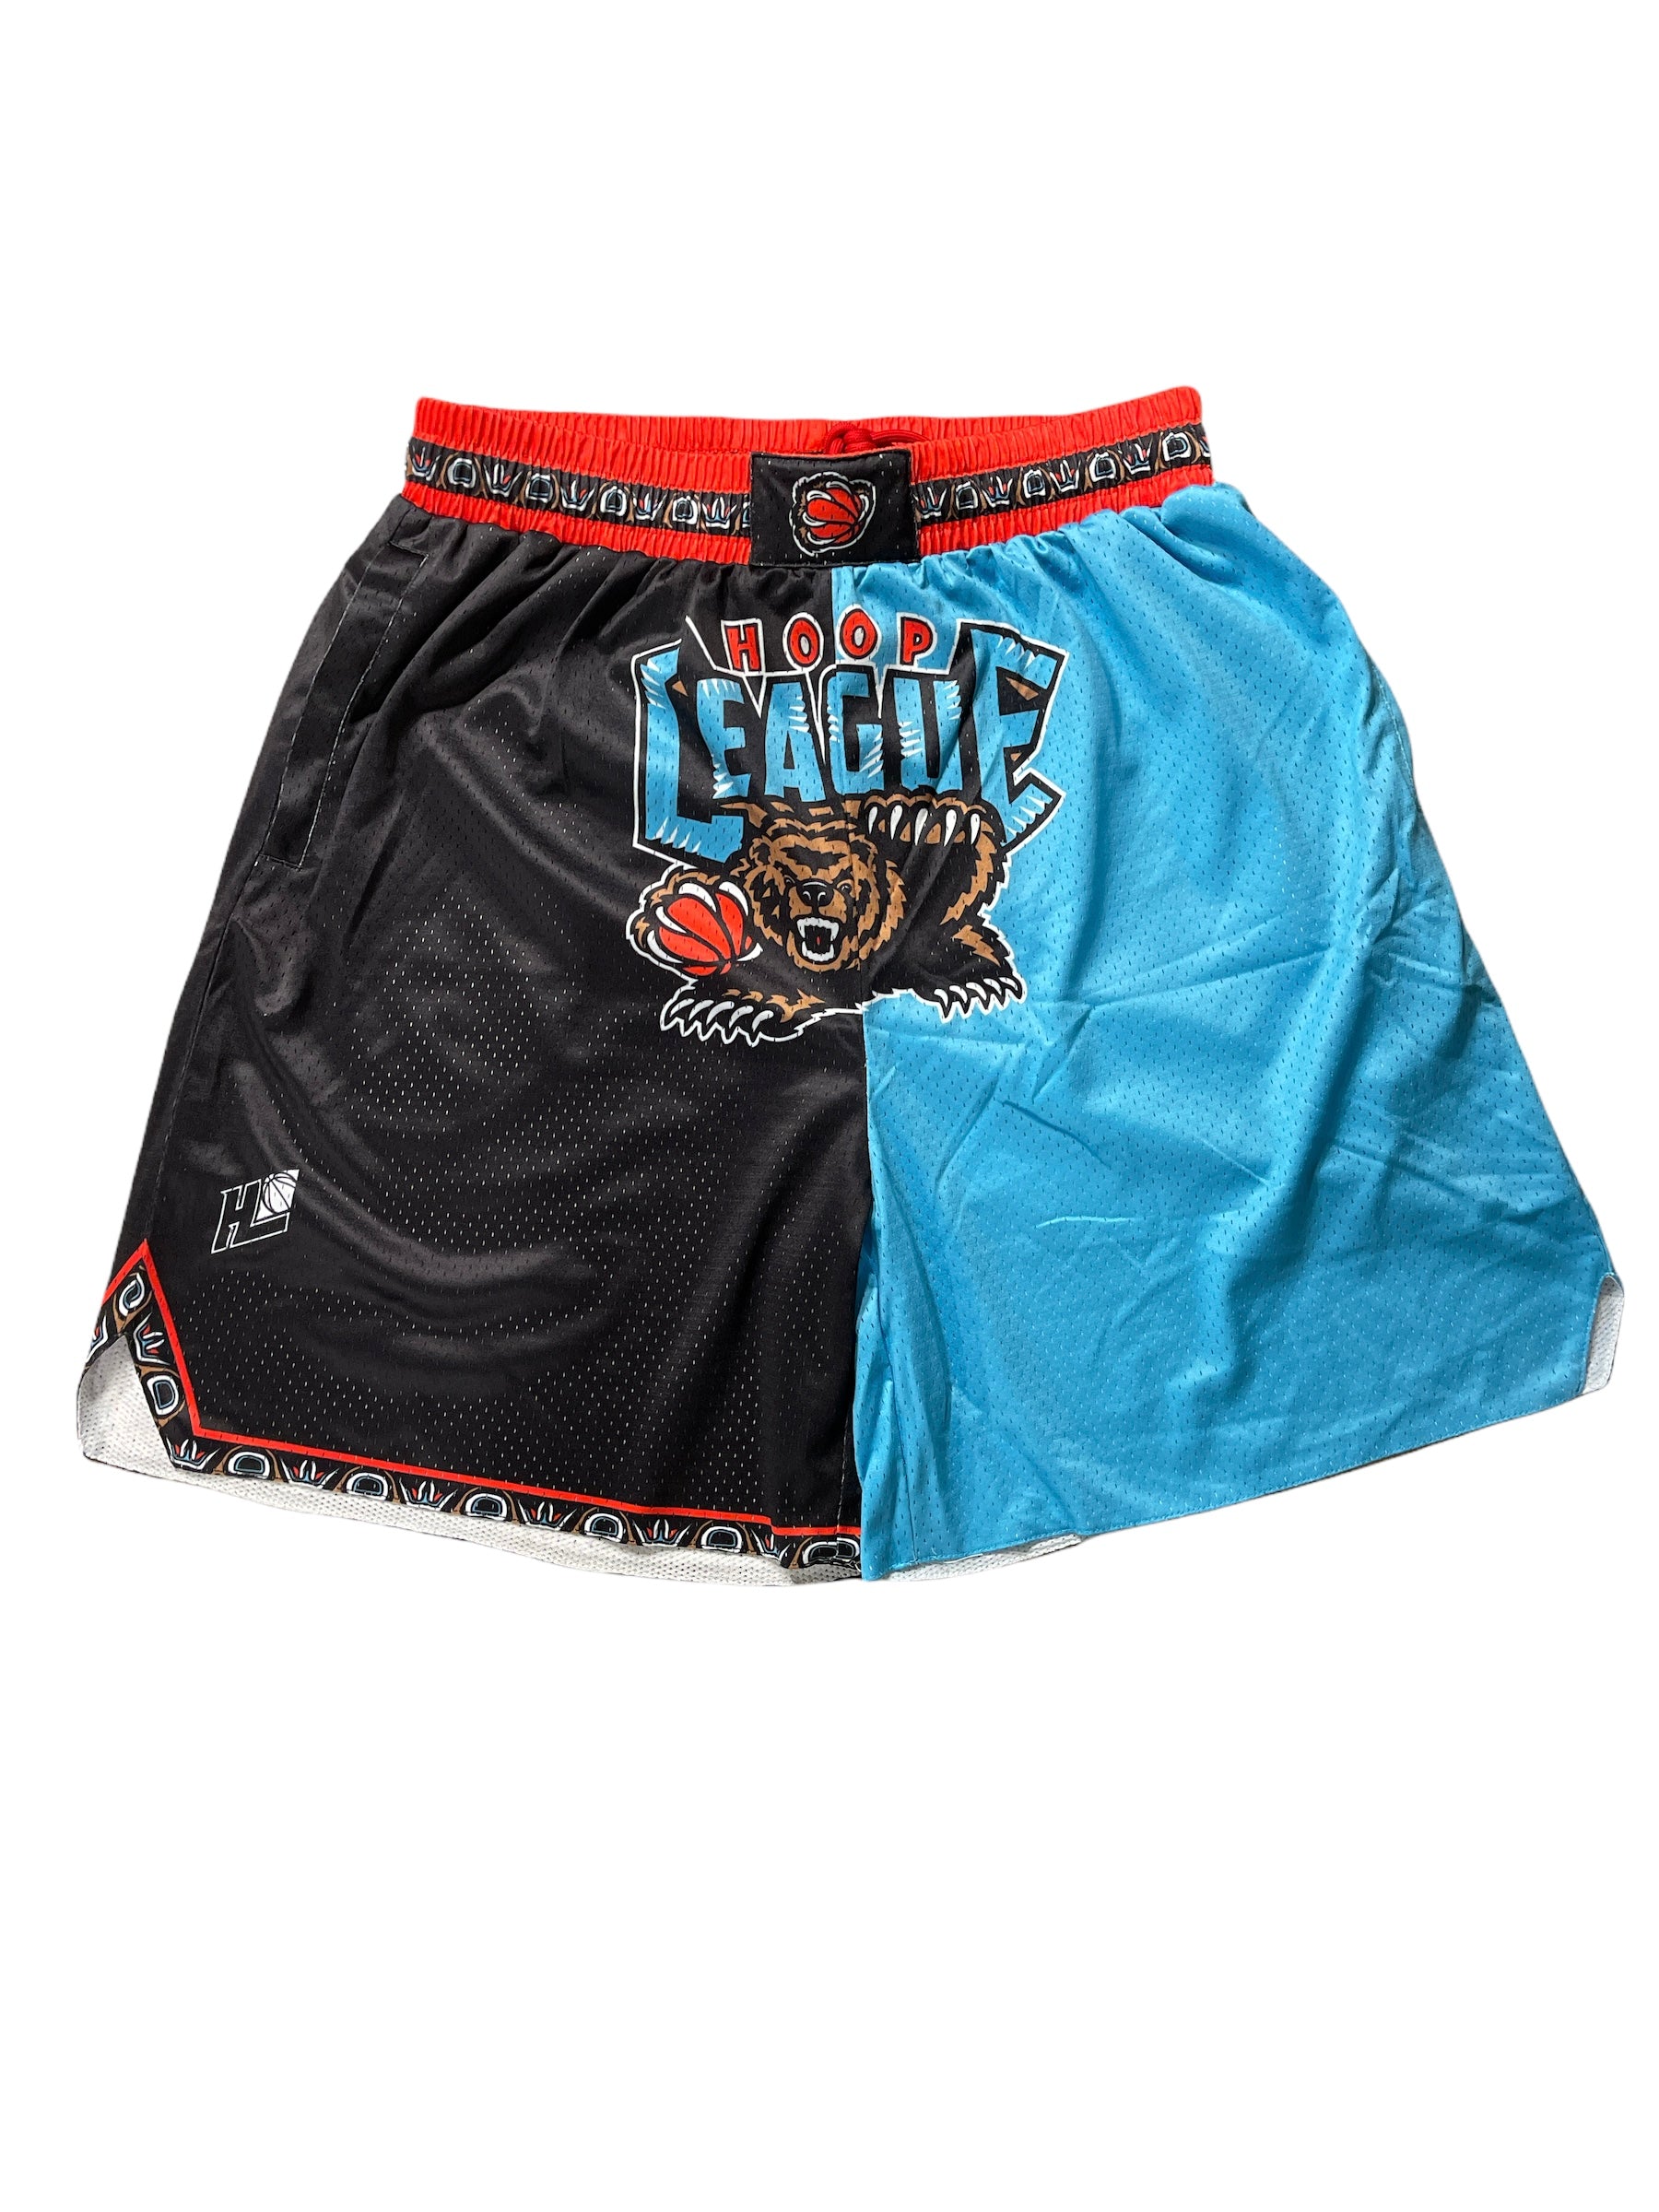 Hoop League Vancouver Game Shorts Blk/Teal | Premium Shorts